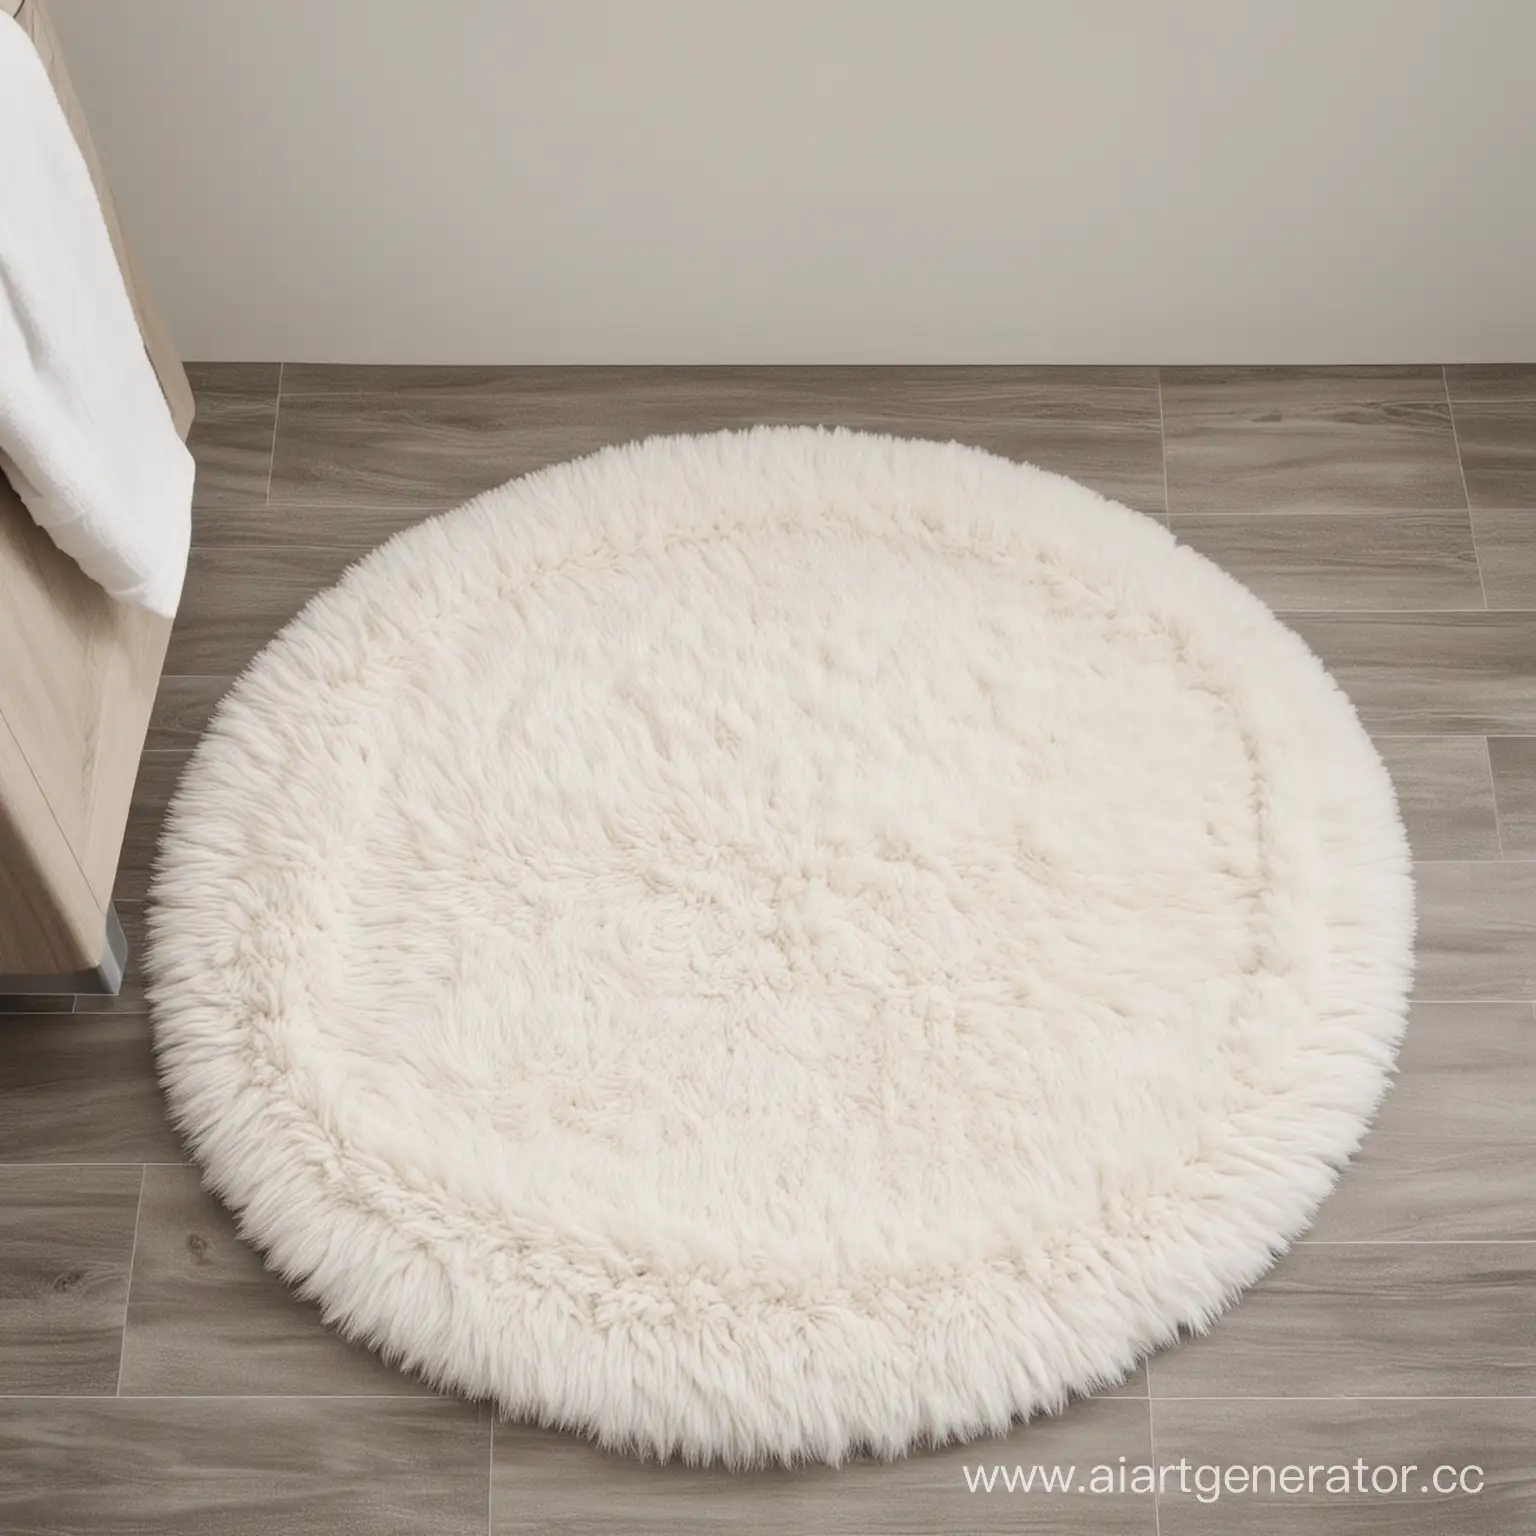 White-Fluffy-Round-Rug-on-Bathroom-Floor